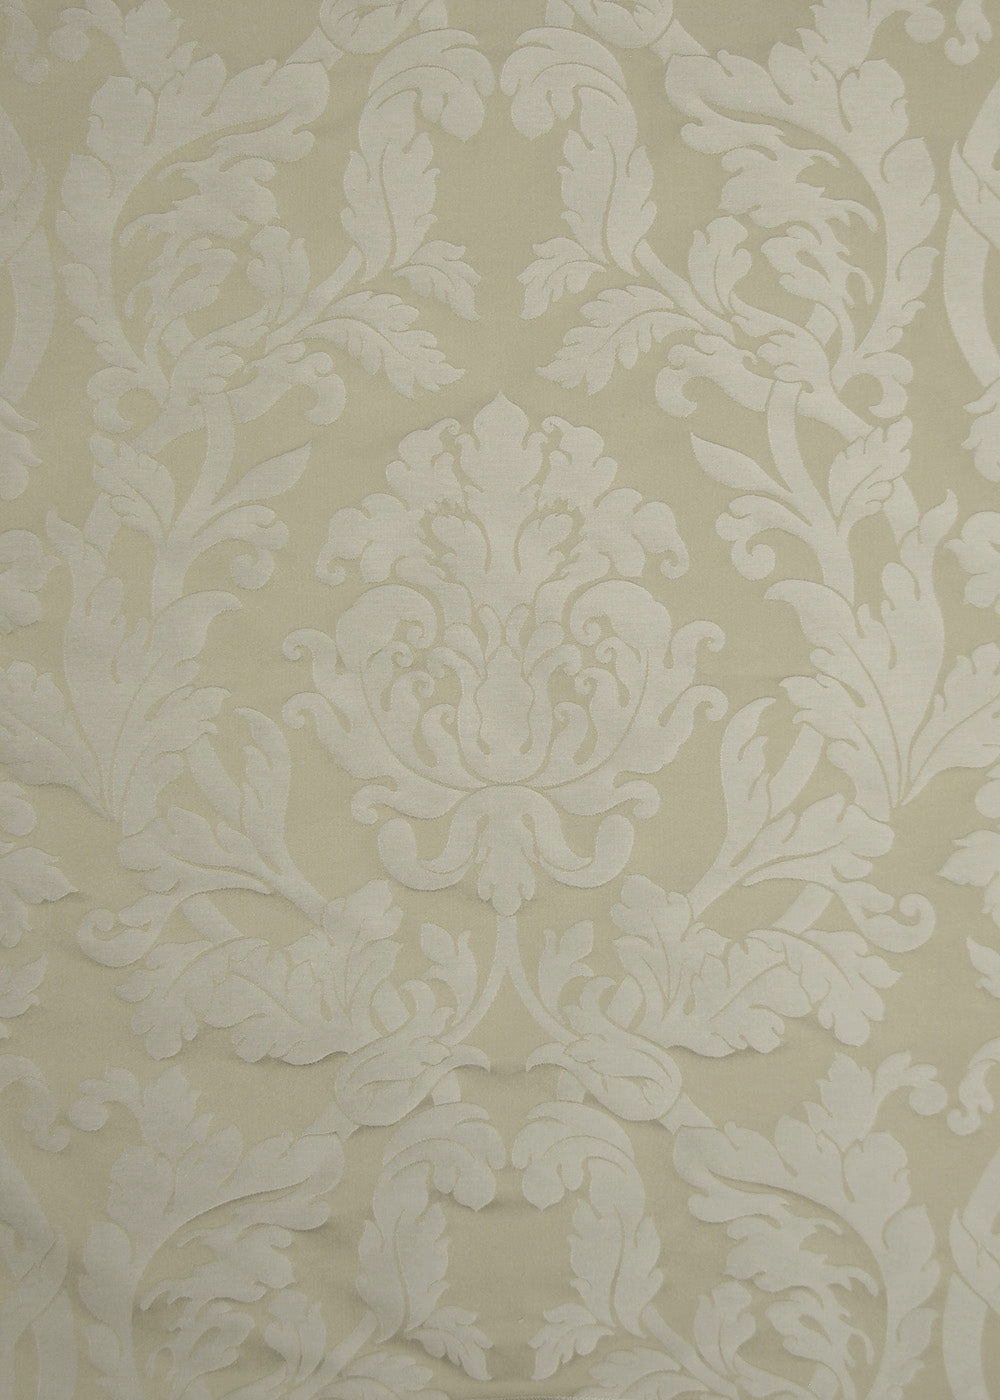 light celadon satin fabric with a subtle damask pattern